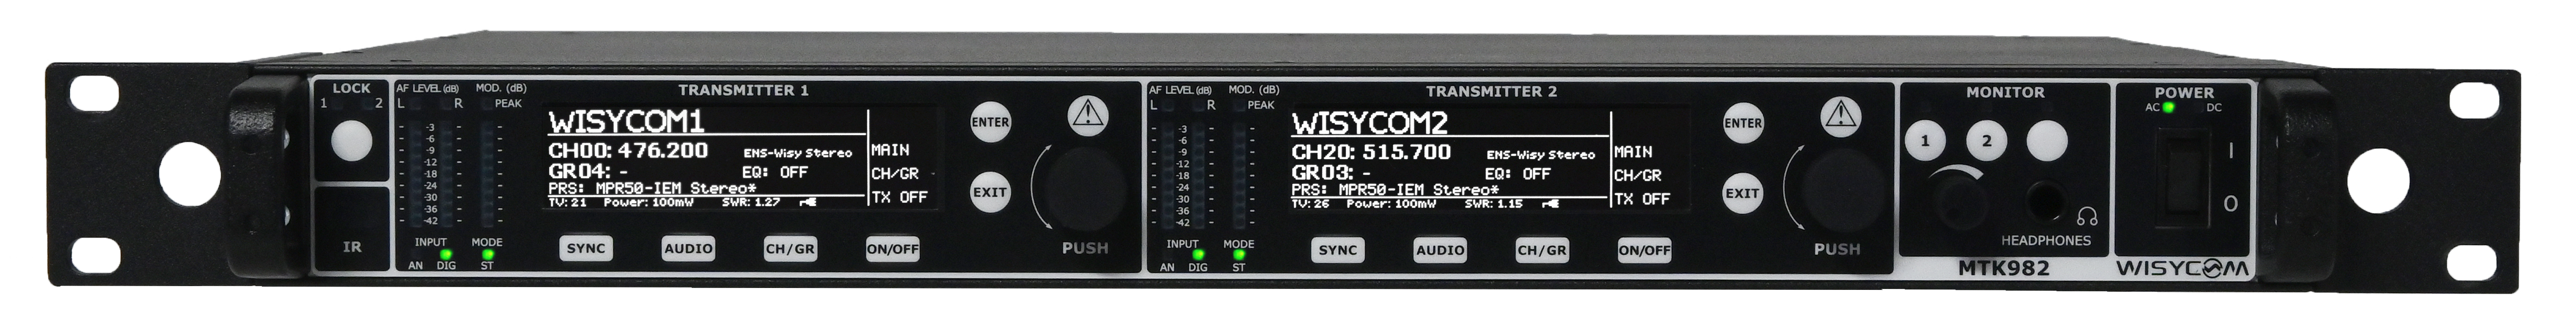 MTK982 dual-wideband stereo IEM/IFB transmitter